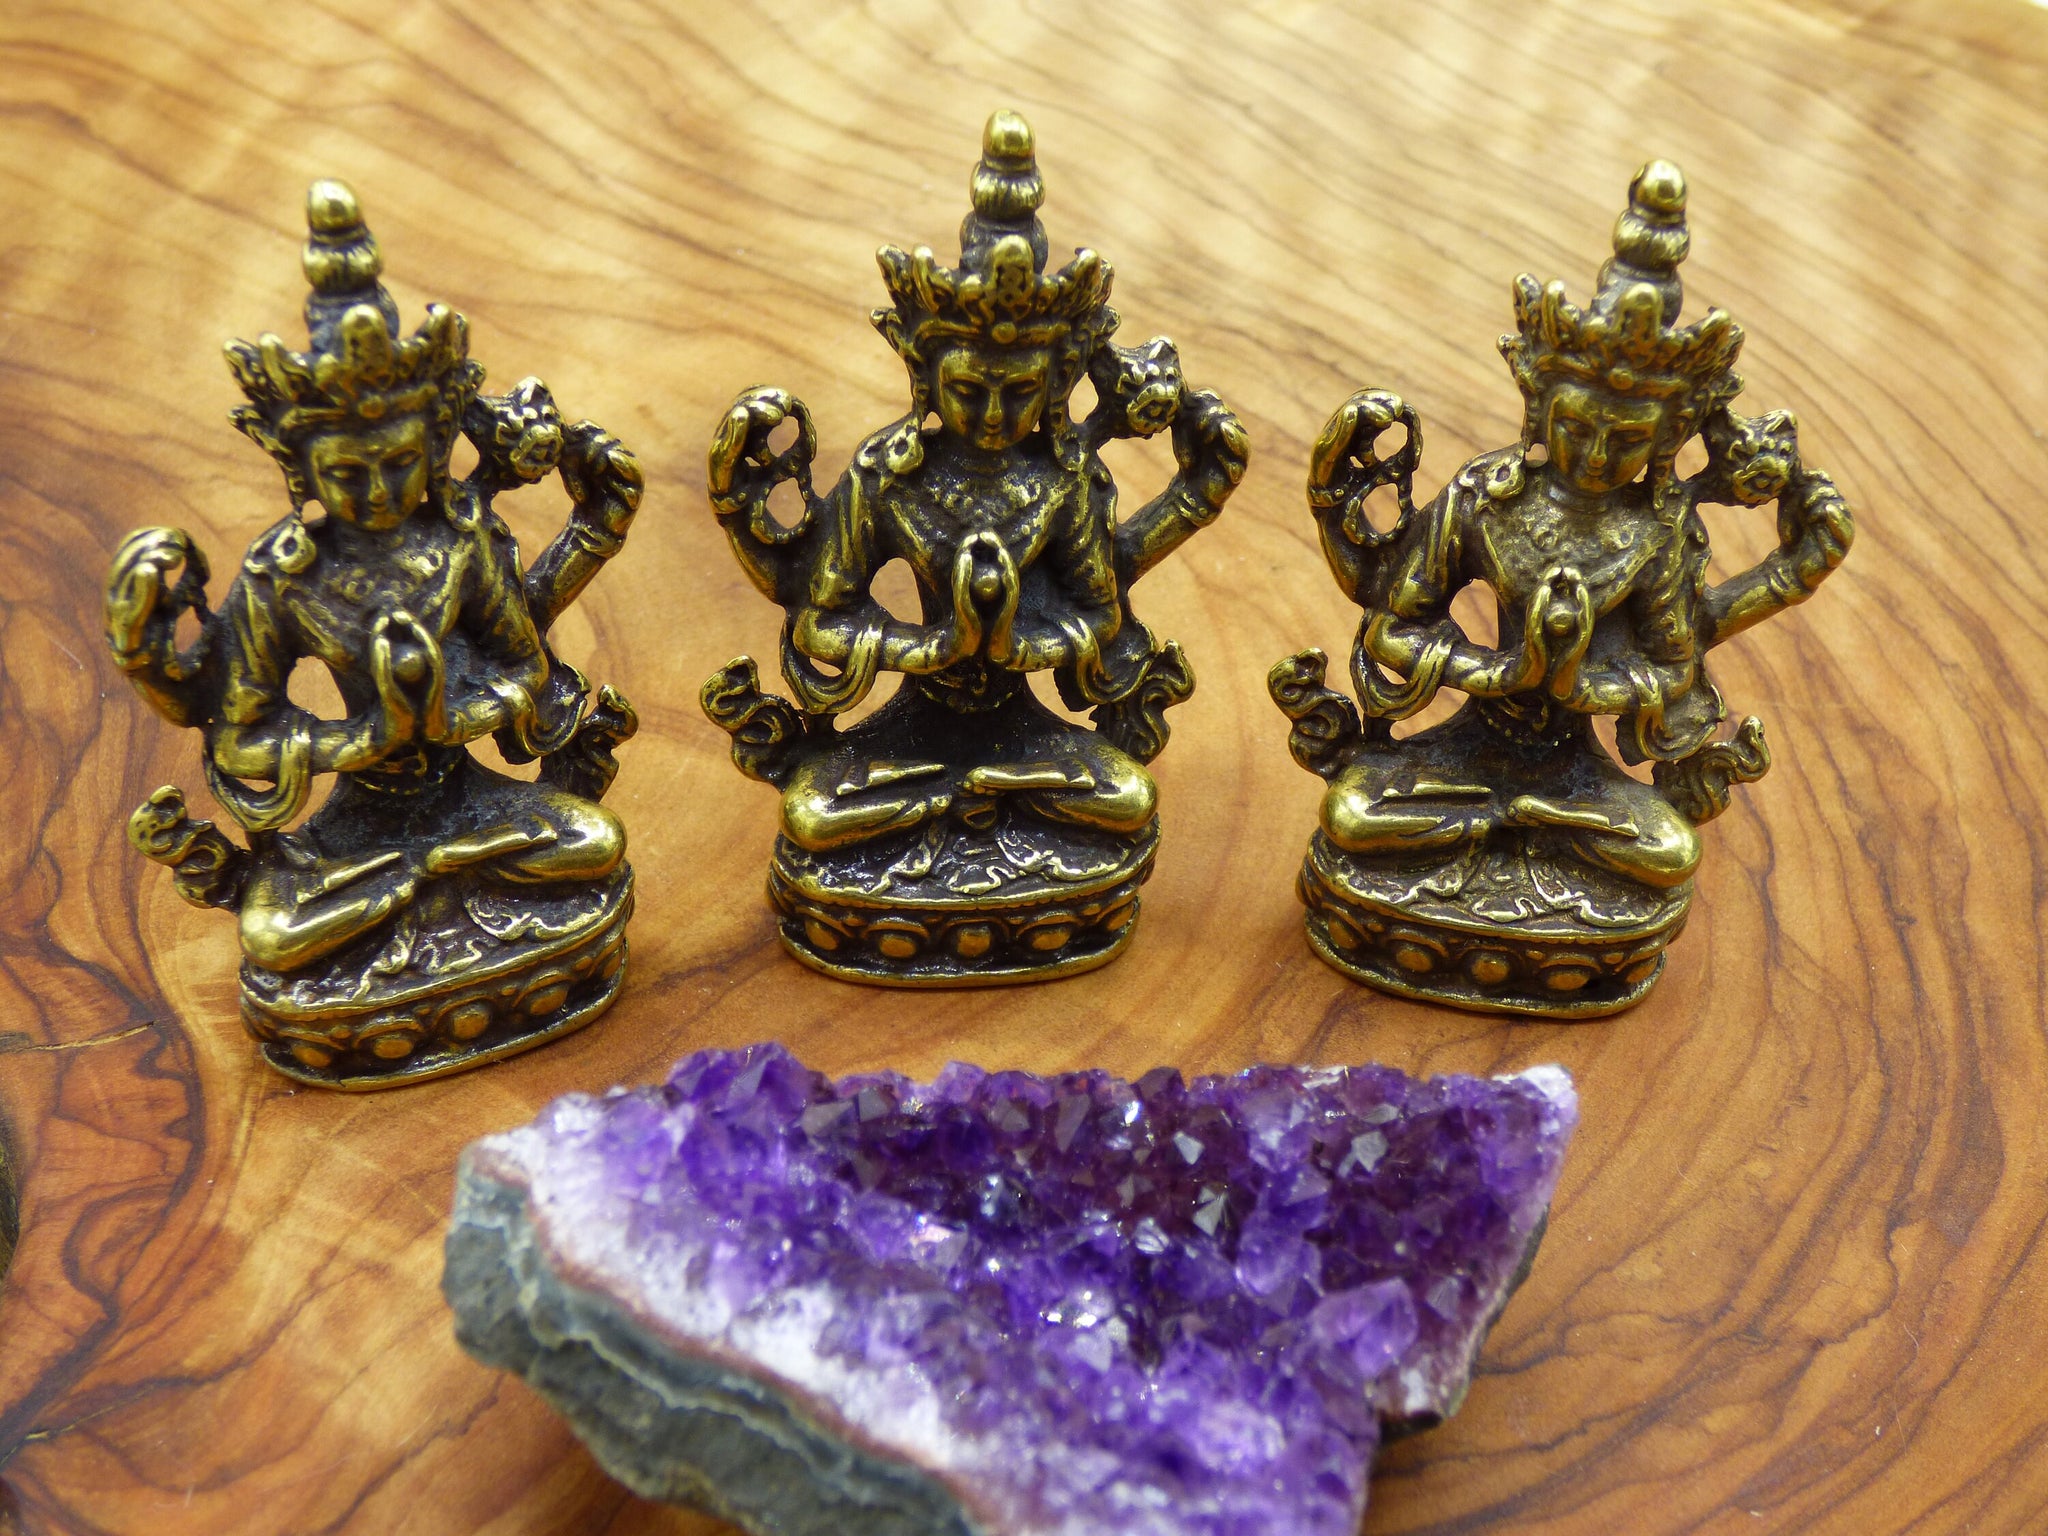 Sanskrit Figur Messing ~ Buddha Manjushri ~ Glück Figur Buddhismus Deko Altar Vintage Rarität Tibet Boho Hippie Goa Ethno Psy Indien